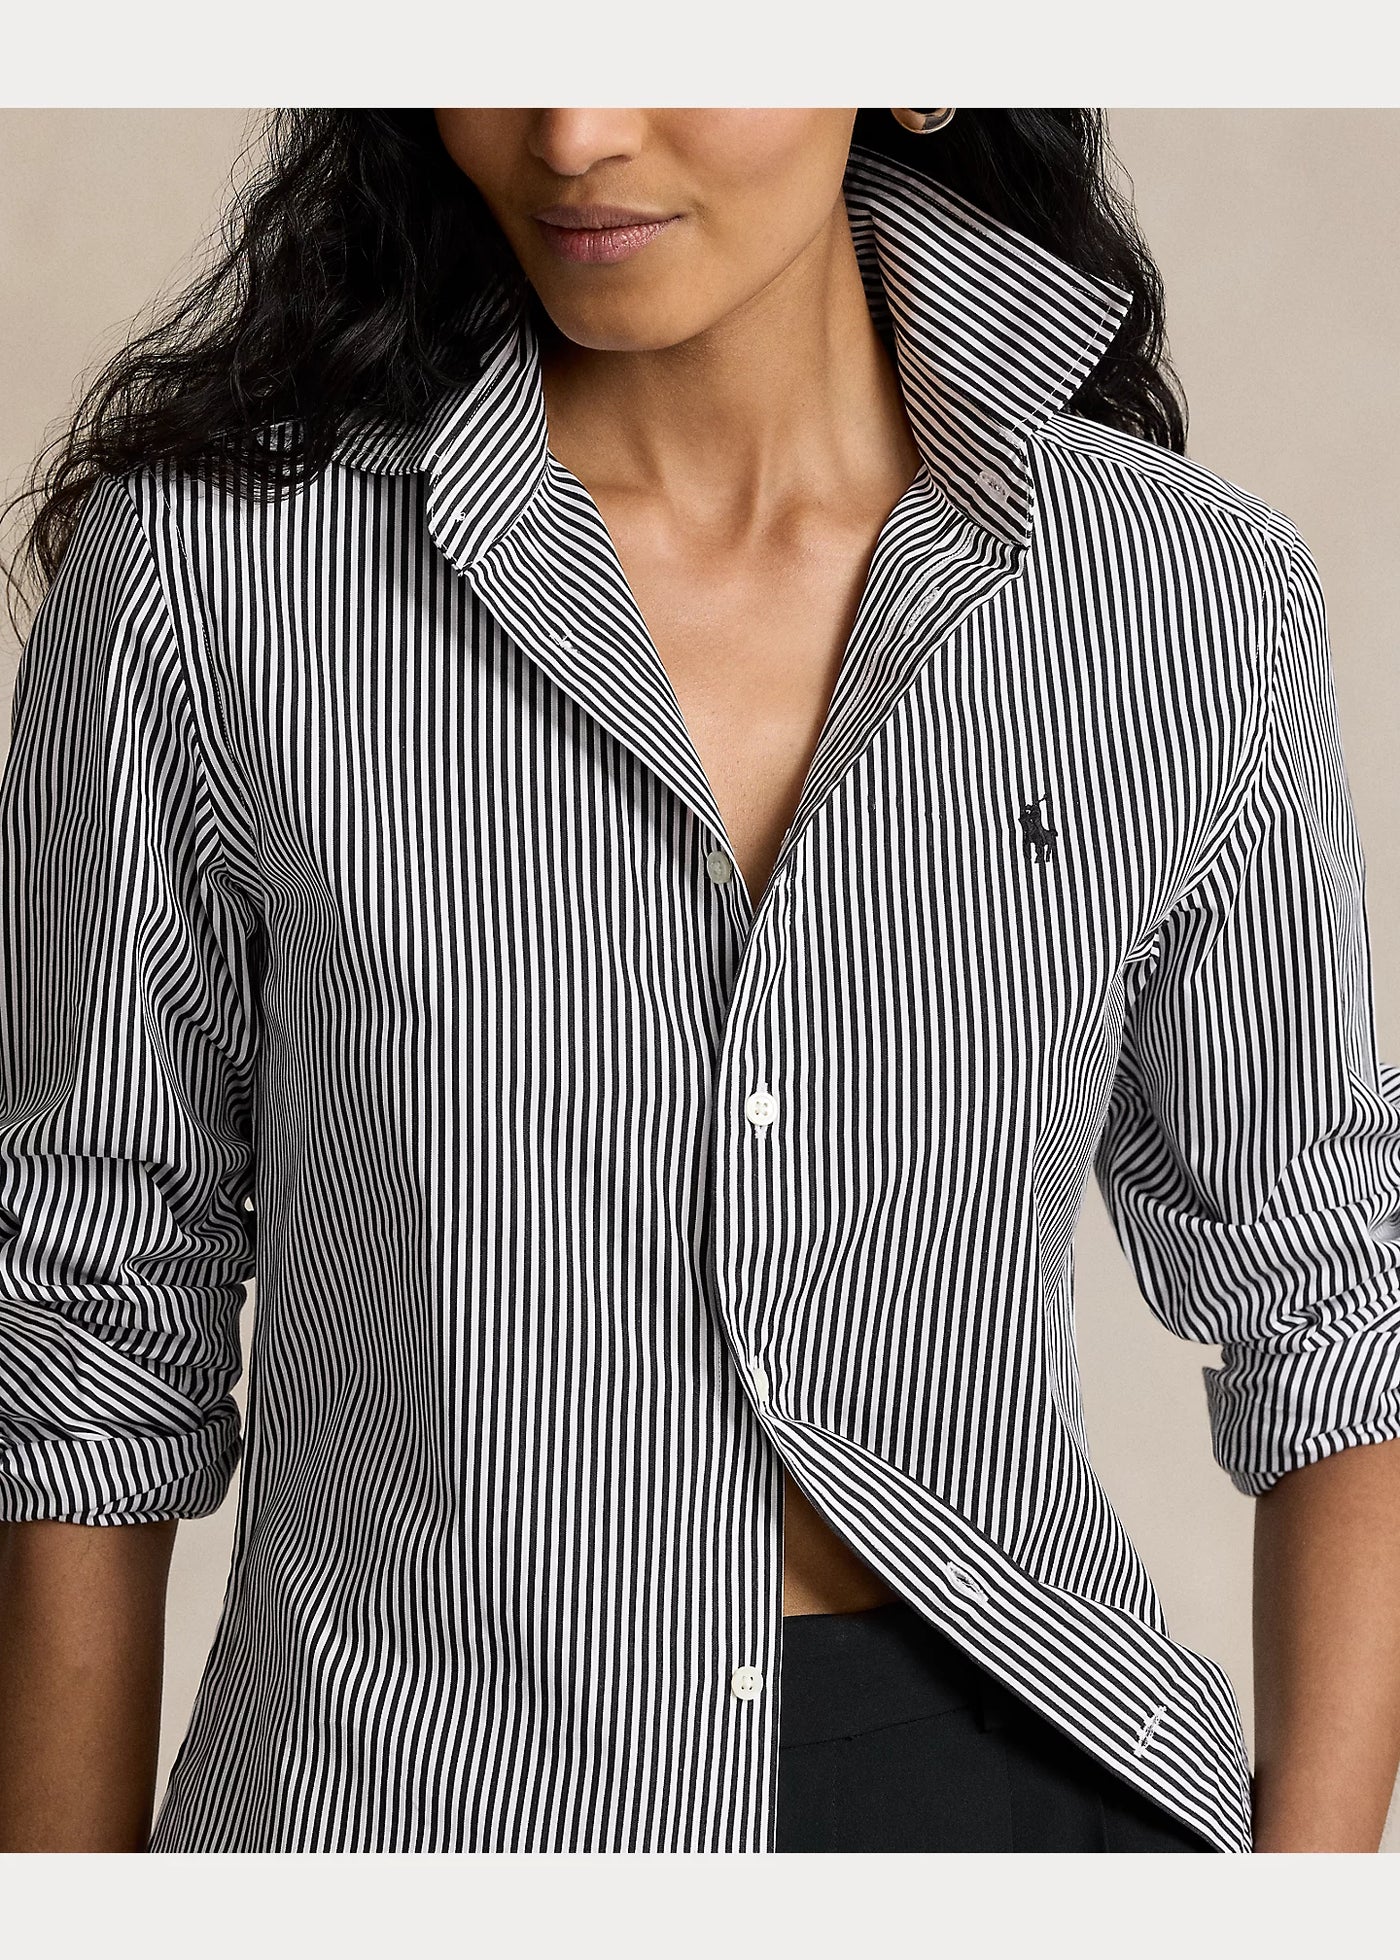 Ralph Lauren Classic Fit Striped Cotton Shirt | White/Black